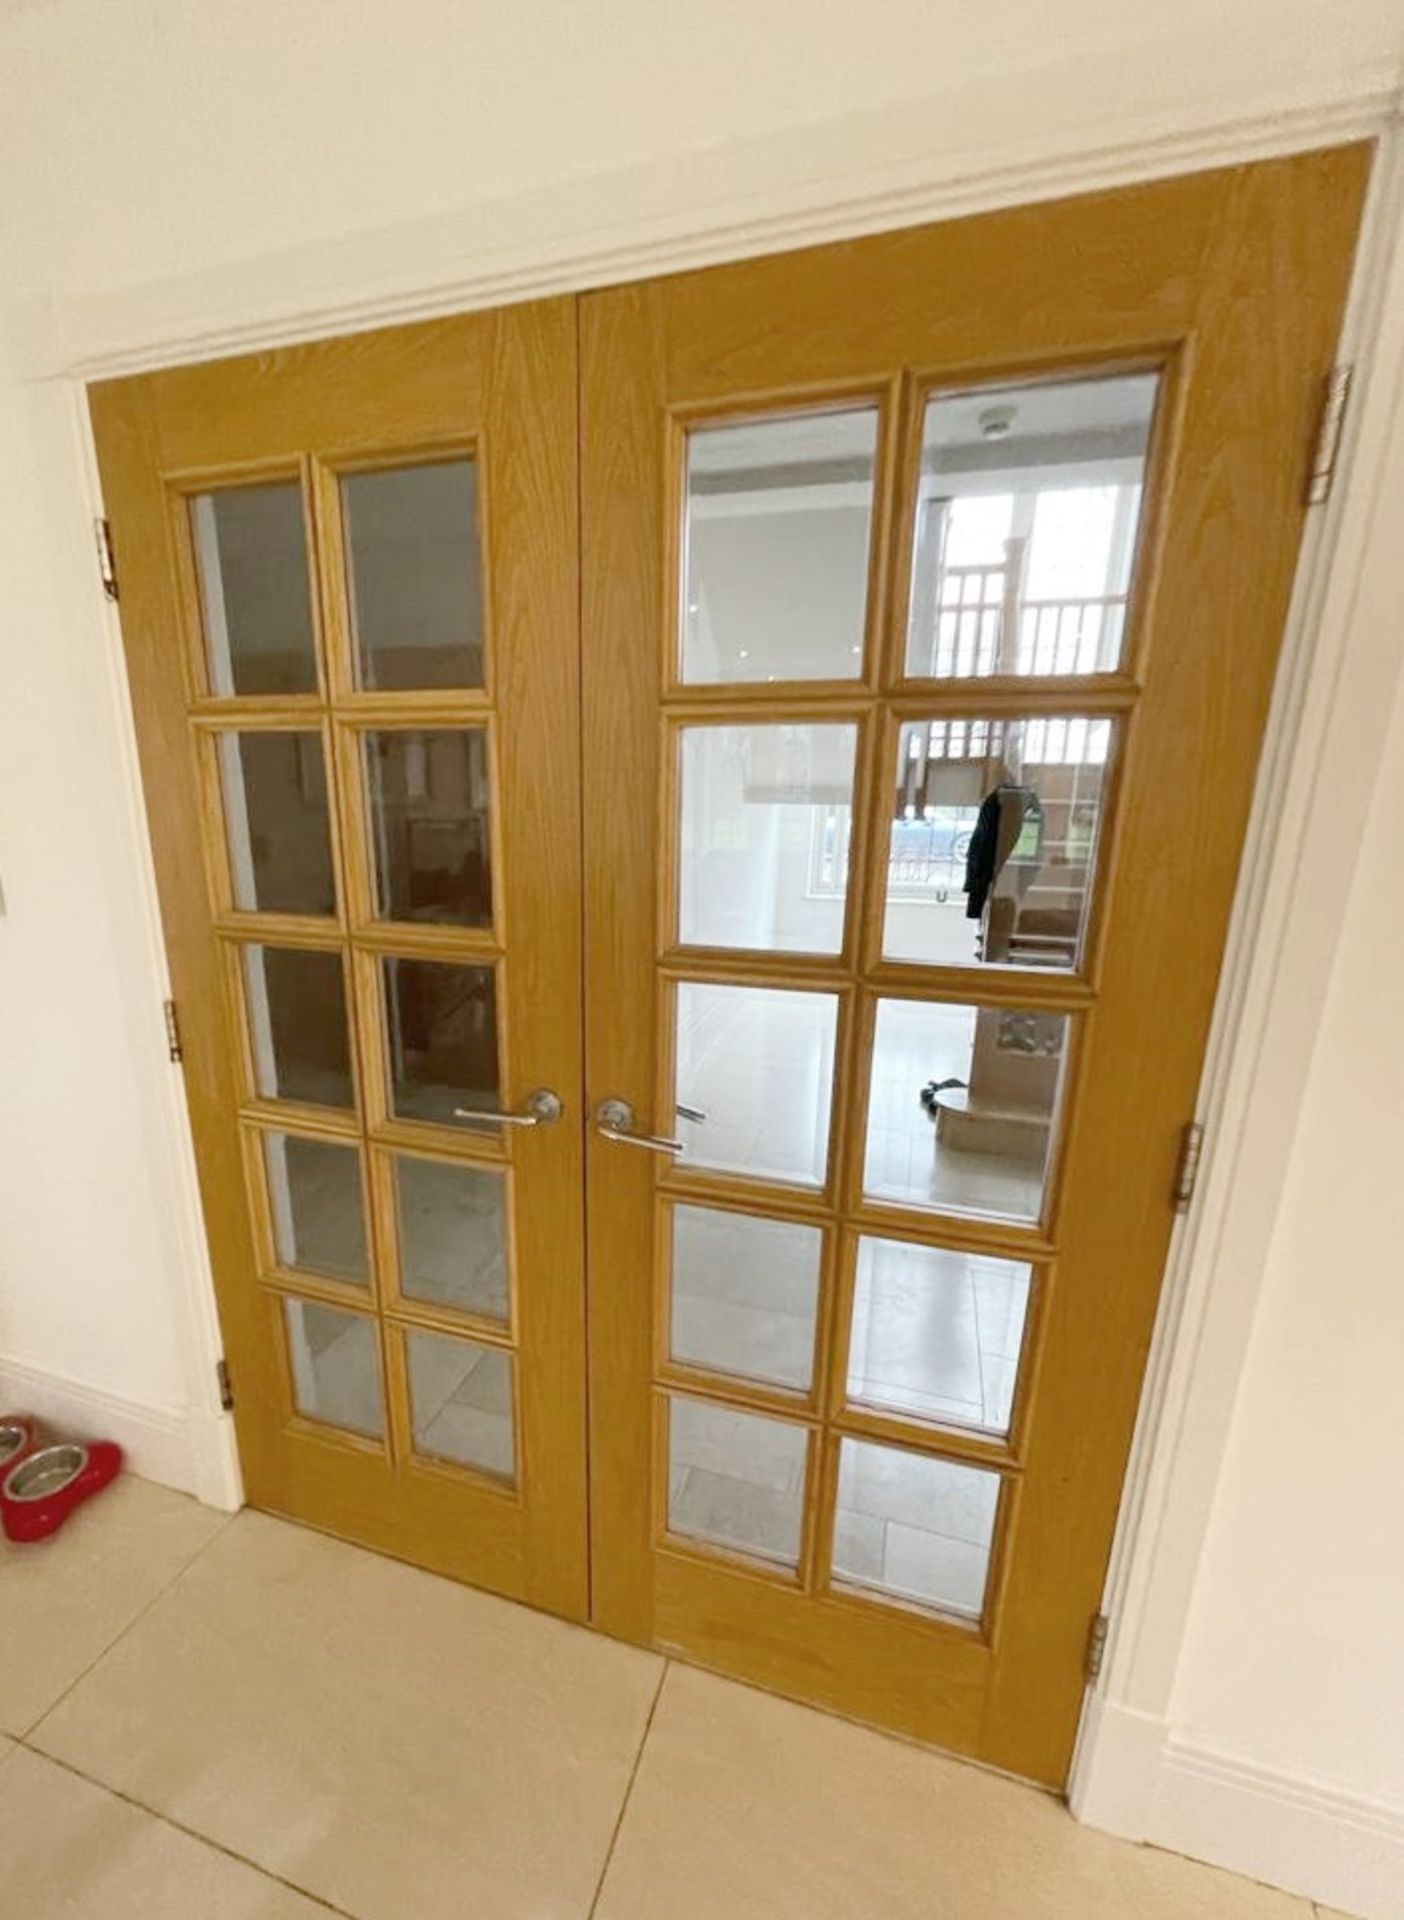 1 x Set Of Solid Oak Wood Glazed Internal Double Doors - Includes Hinges and Handles - NO VAT